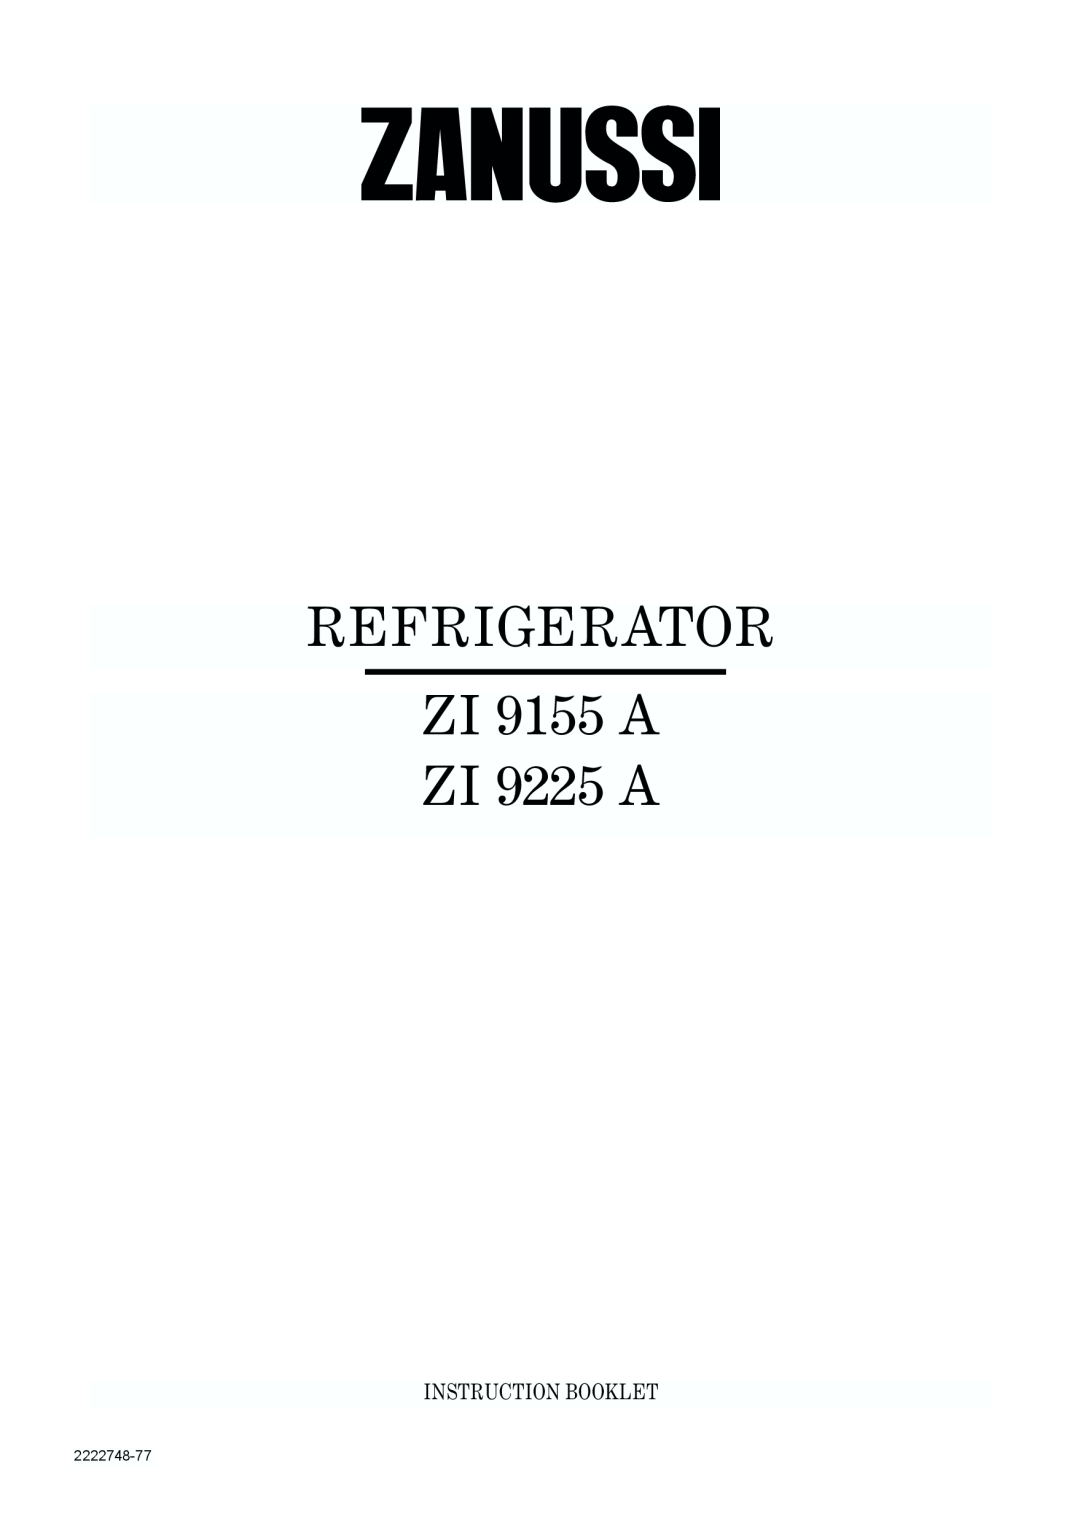 Zanussi Refrigerator, 338 manual REFRIGERATOR ZI 9155 A ZI 9225 A, Instruction Booklet, 2222748-77 